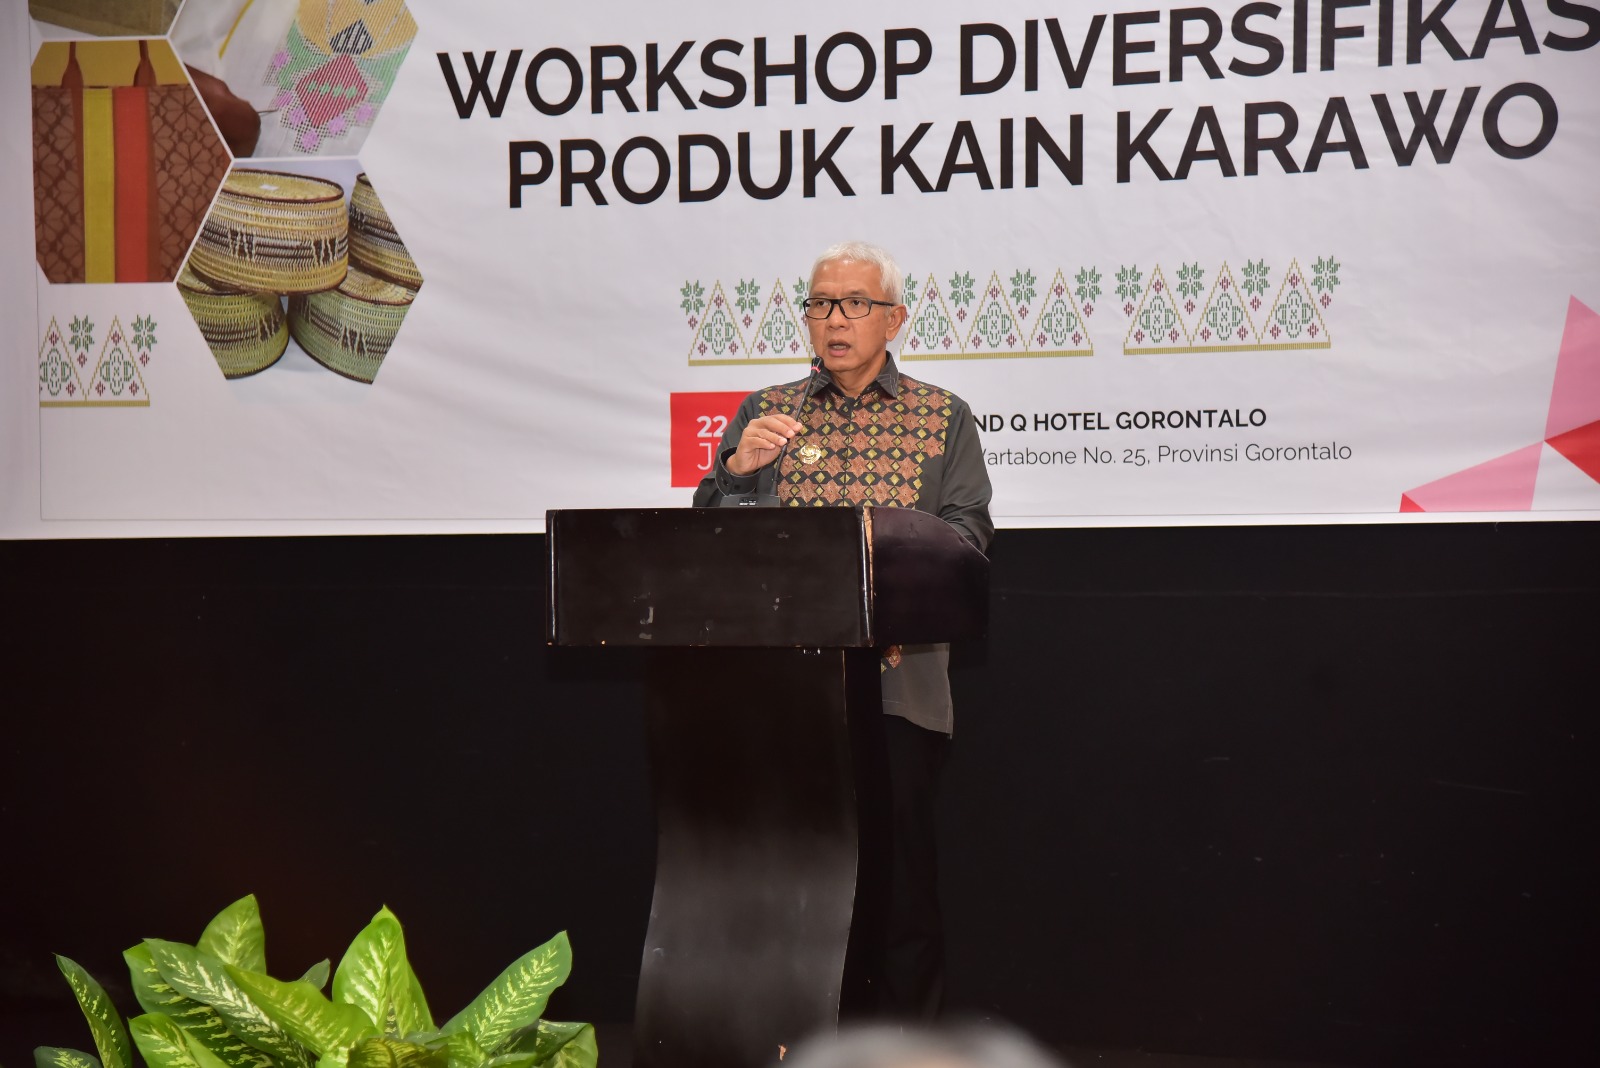  Workshop Diversifikasi Kain Karawo Diminta Ciptakan Produk Berdaya Saing